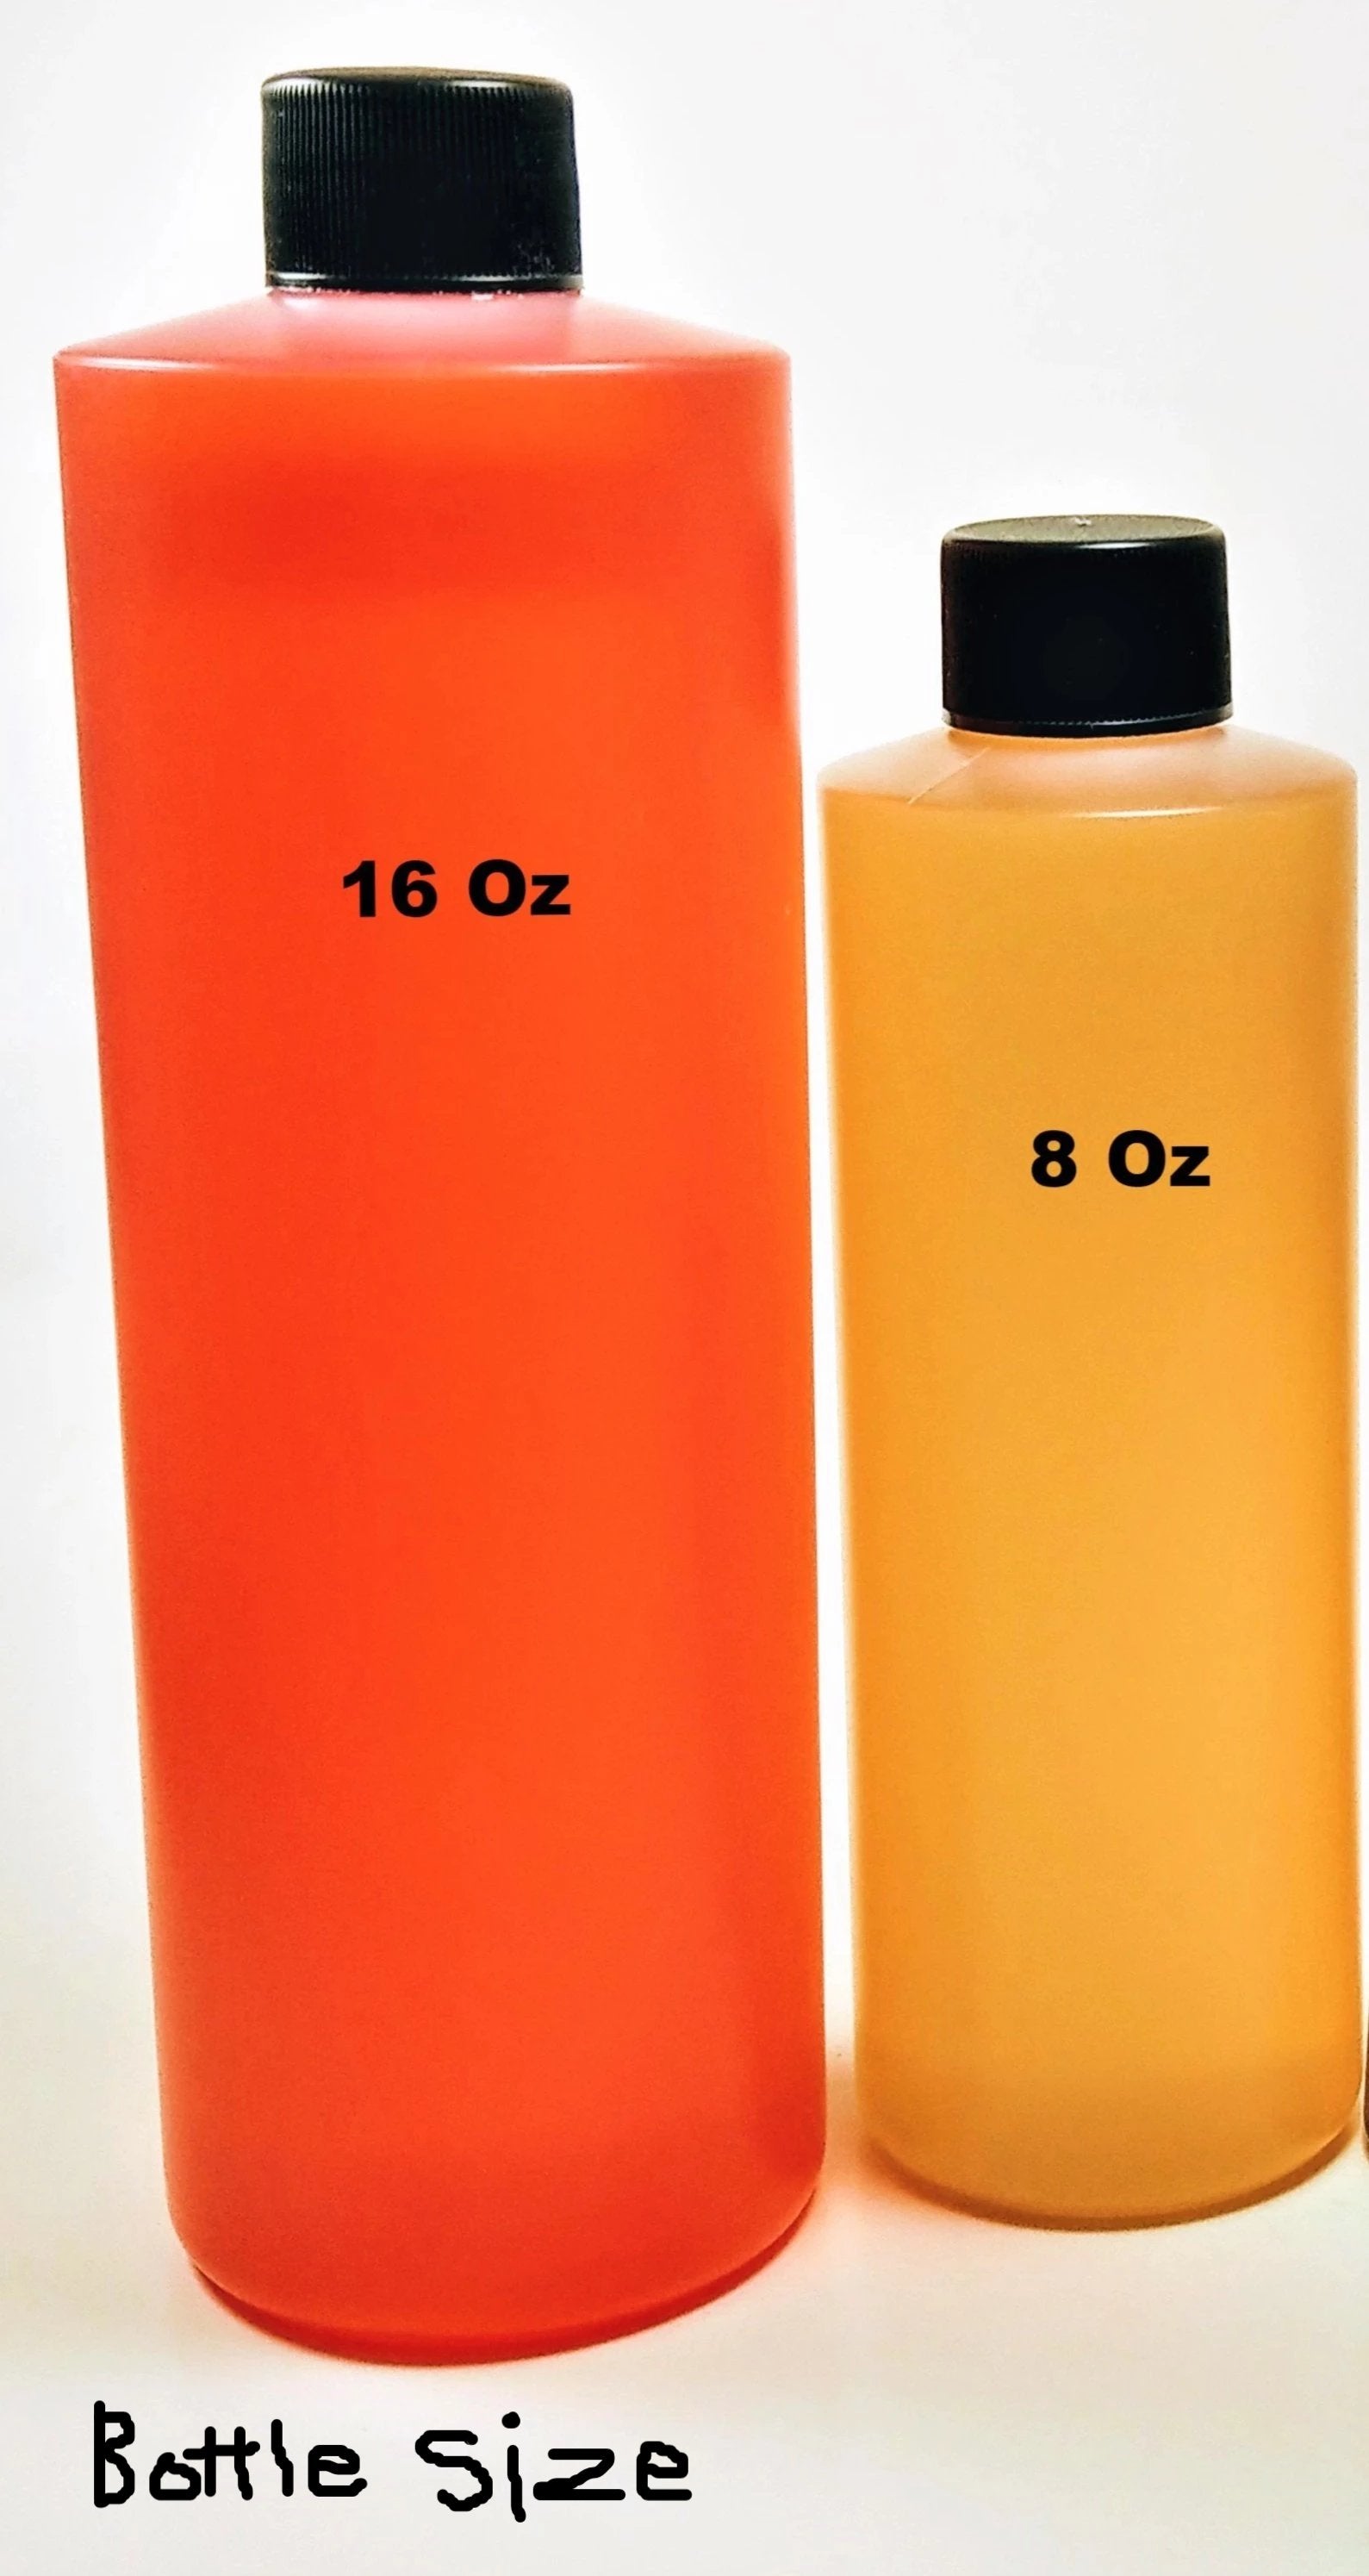 Egyptian Musk Fragrances Xio's Body Oil Scented Fragrances – Xio's  Fragrances & Essences